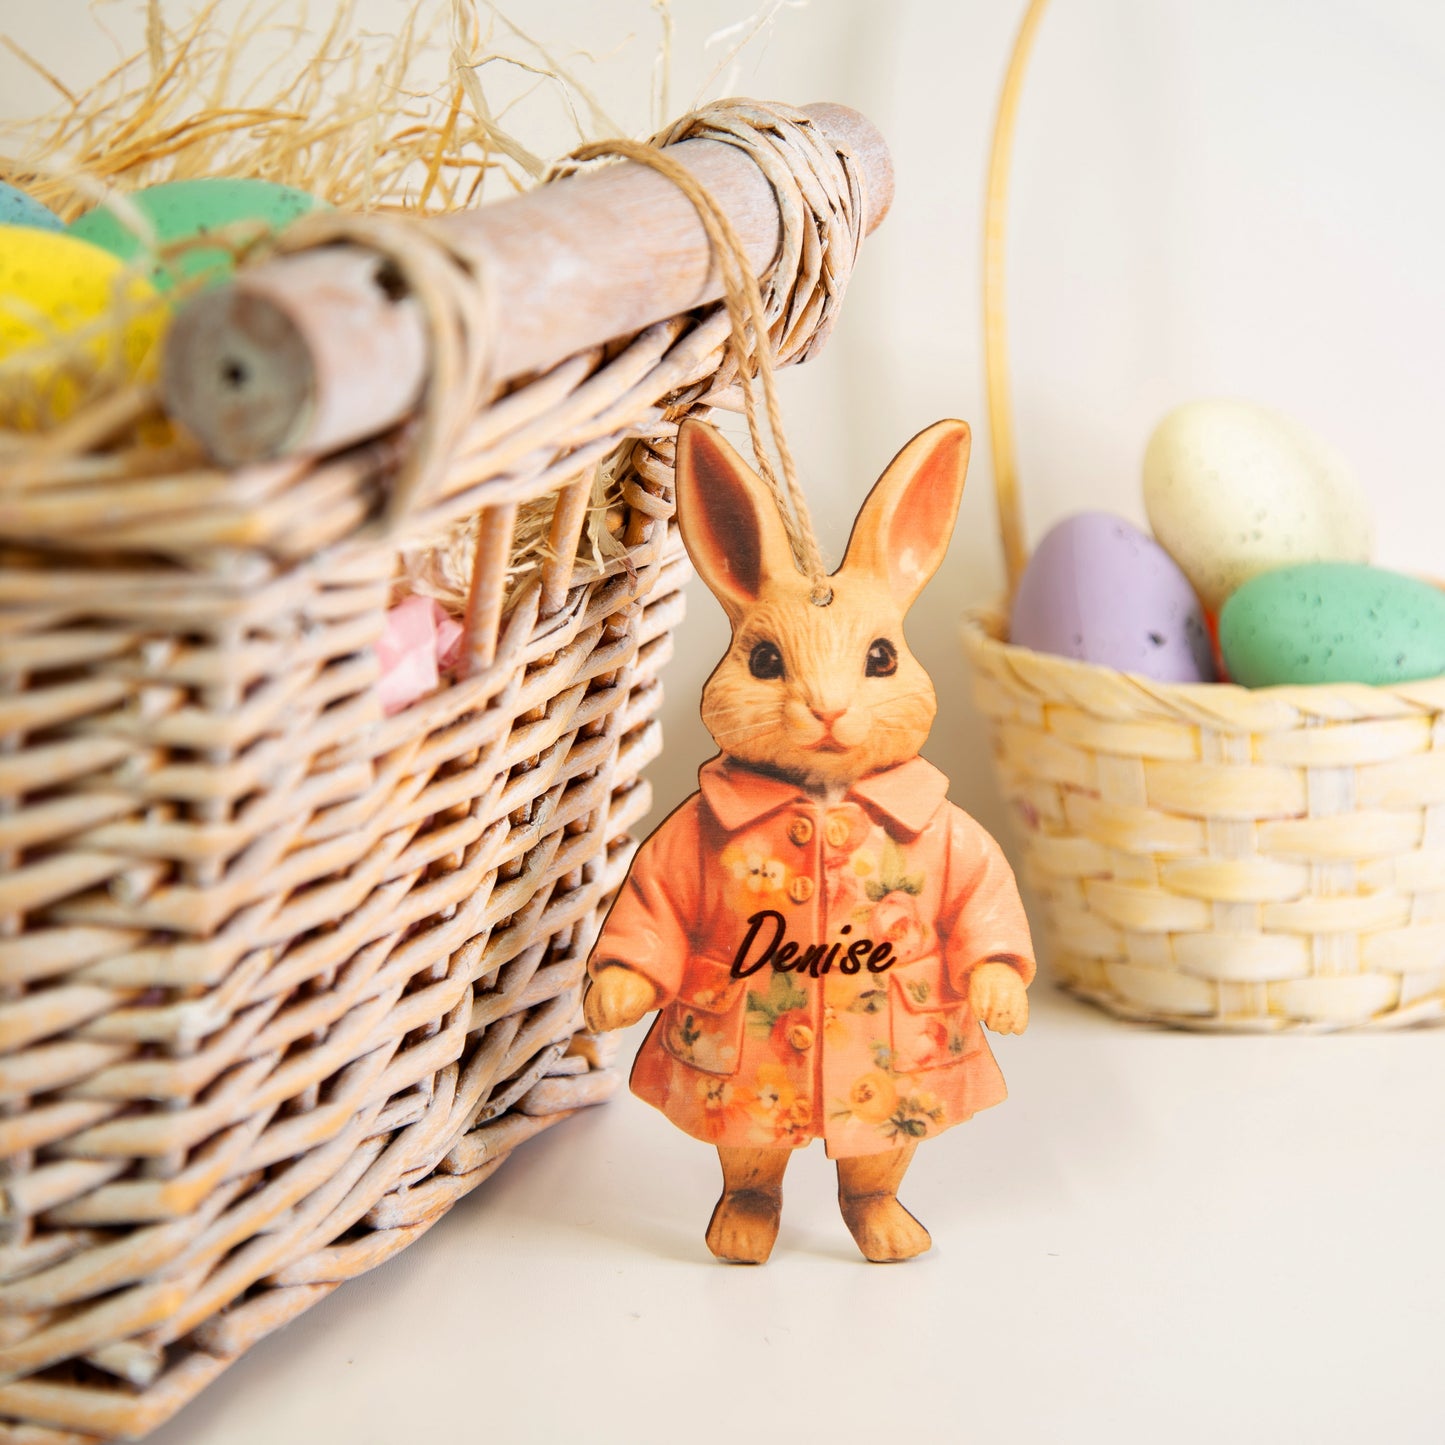 Personalised Easter Rabbit Place name  | Easter Basket Tag  | Wooden Easter Decoration  | Easter Place name | Easter Gift  | Easter Egg Hunt